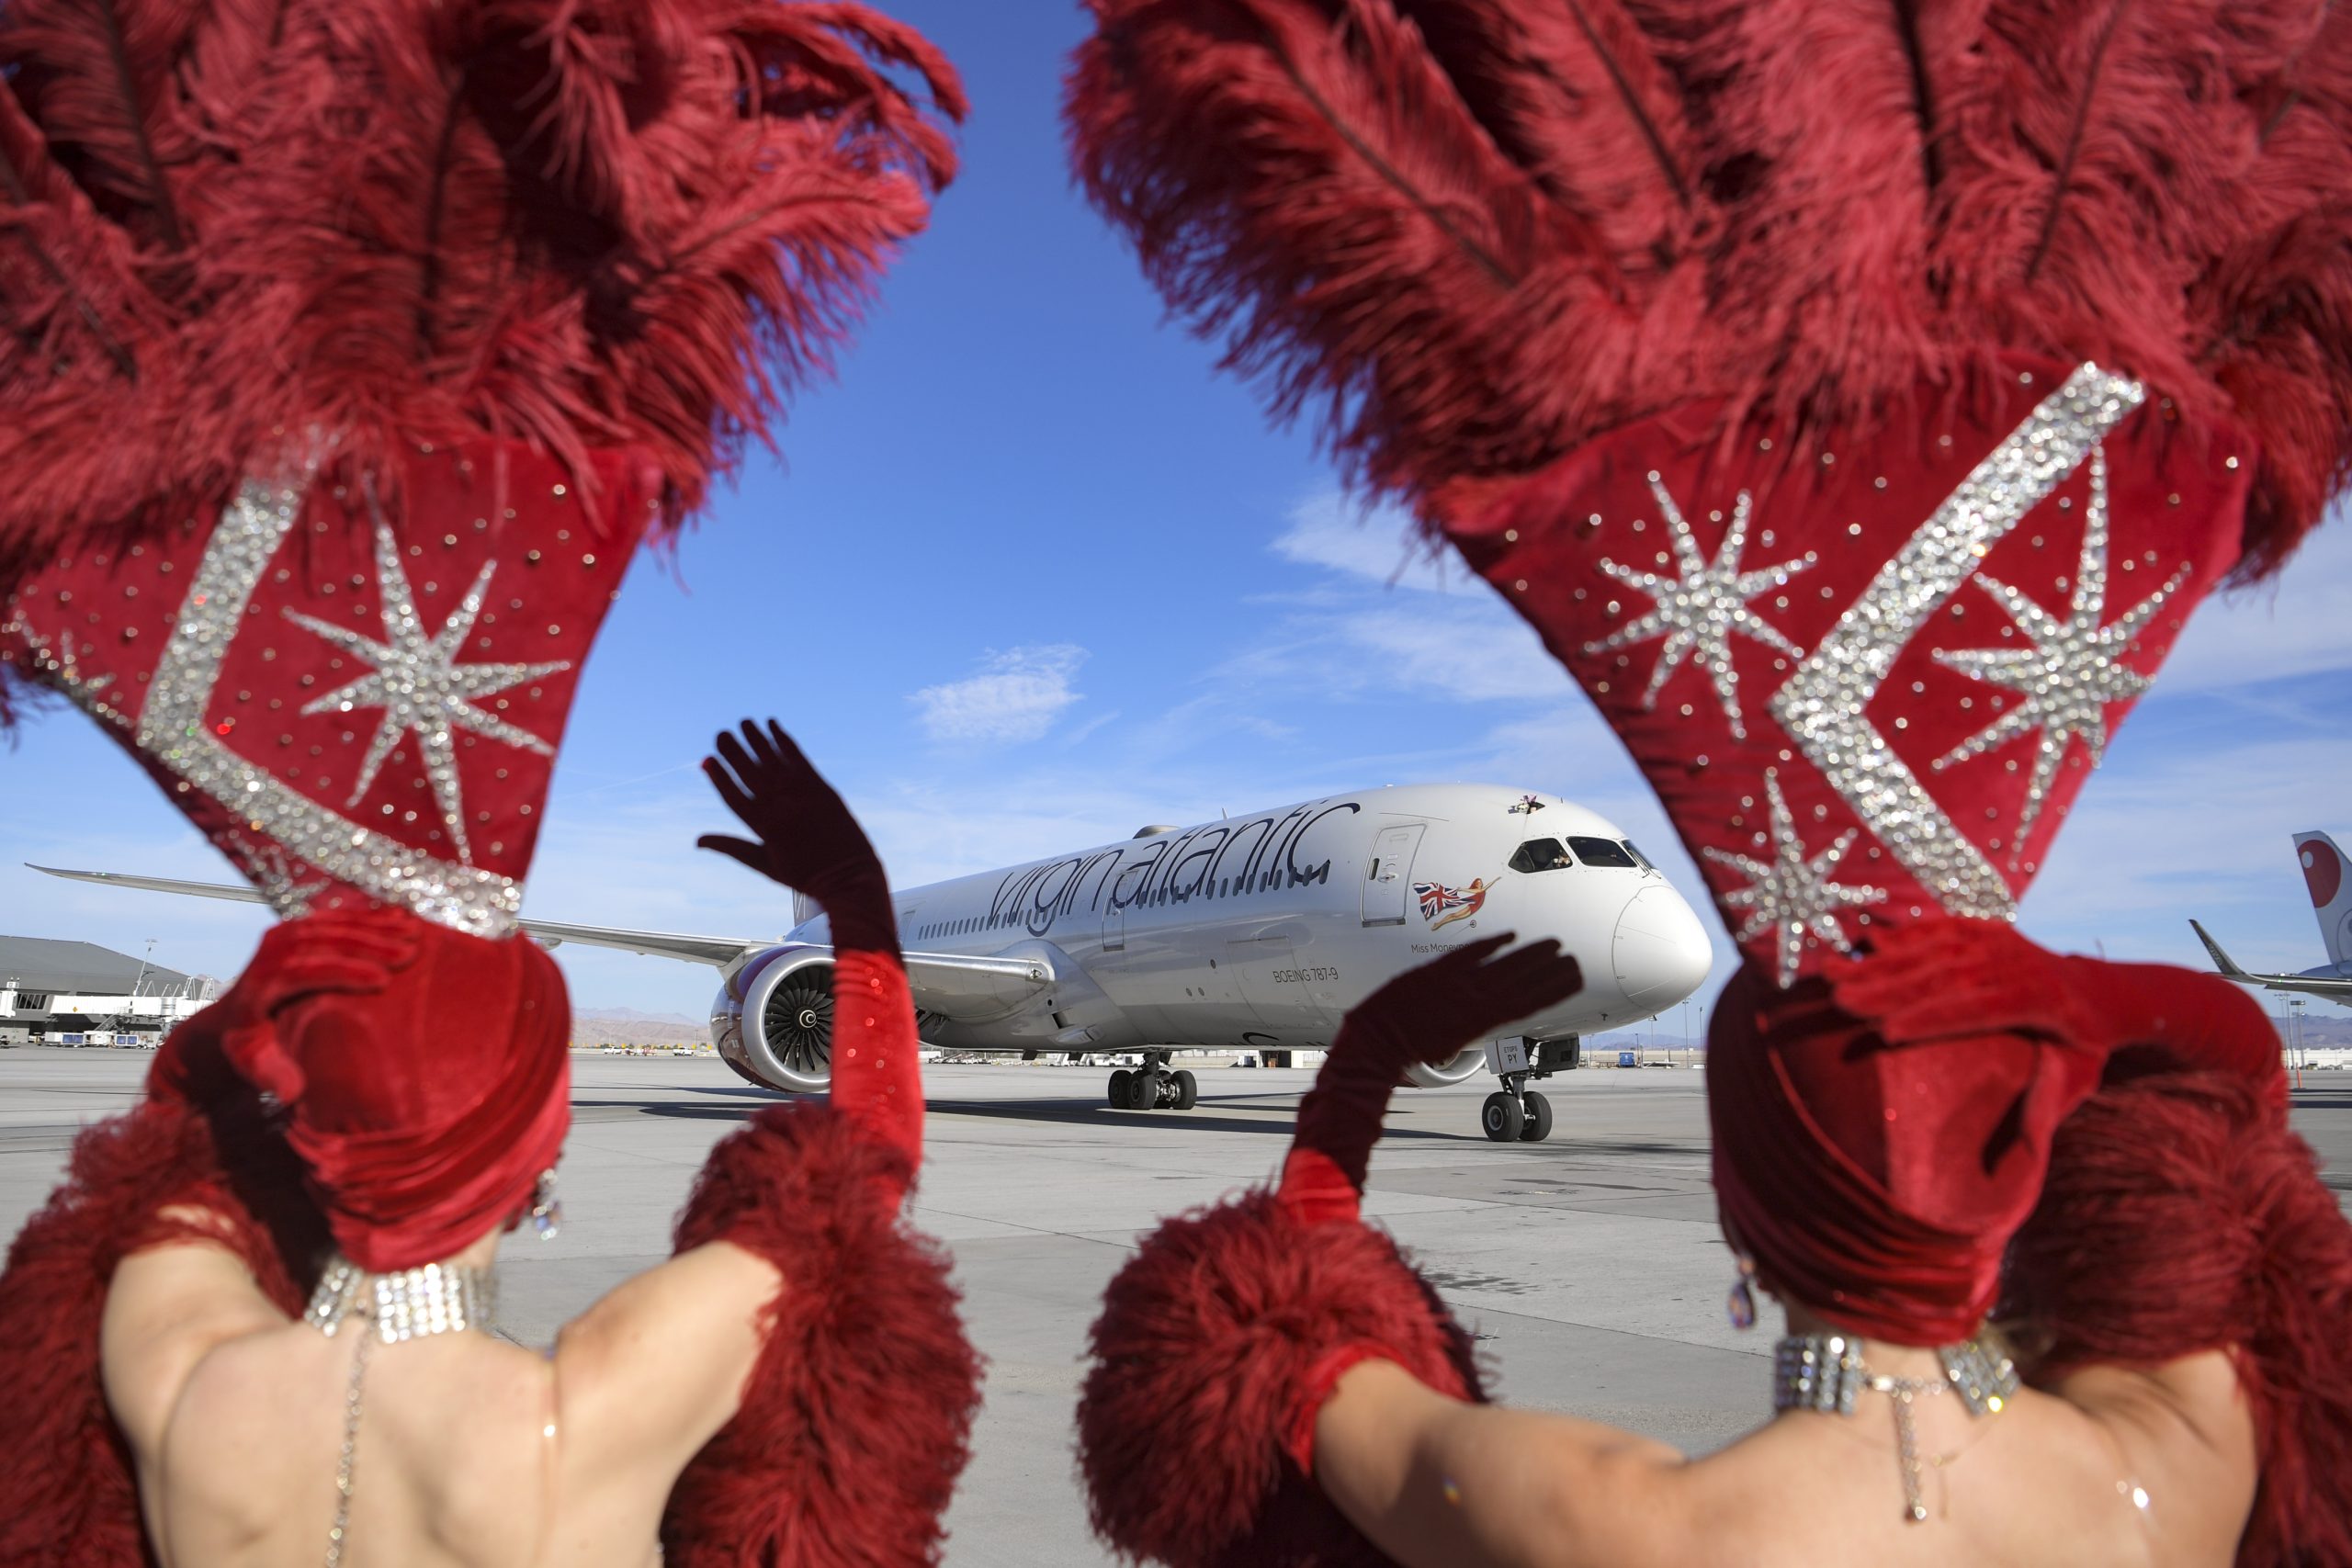 Las Vegas Showgirls Welcome a Virgin Atlantic Flight |